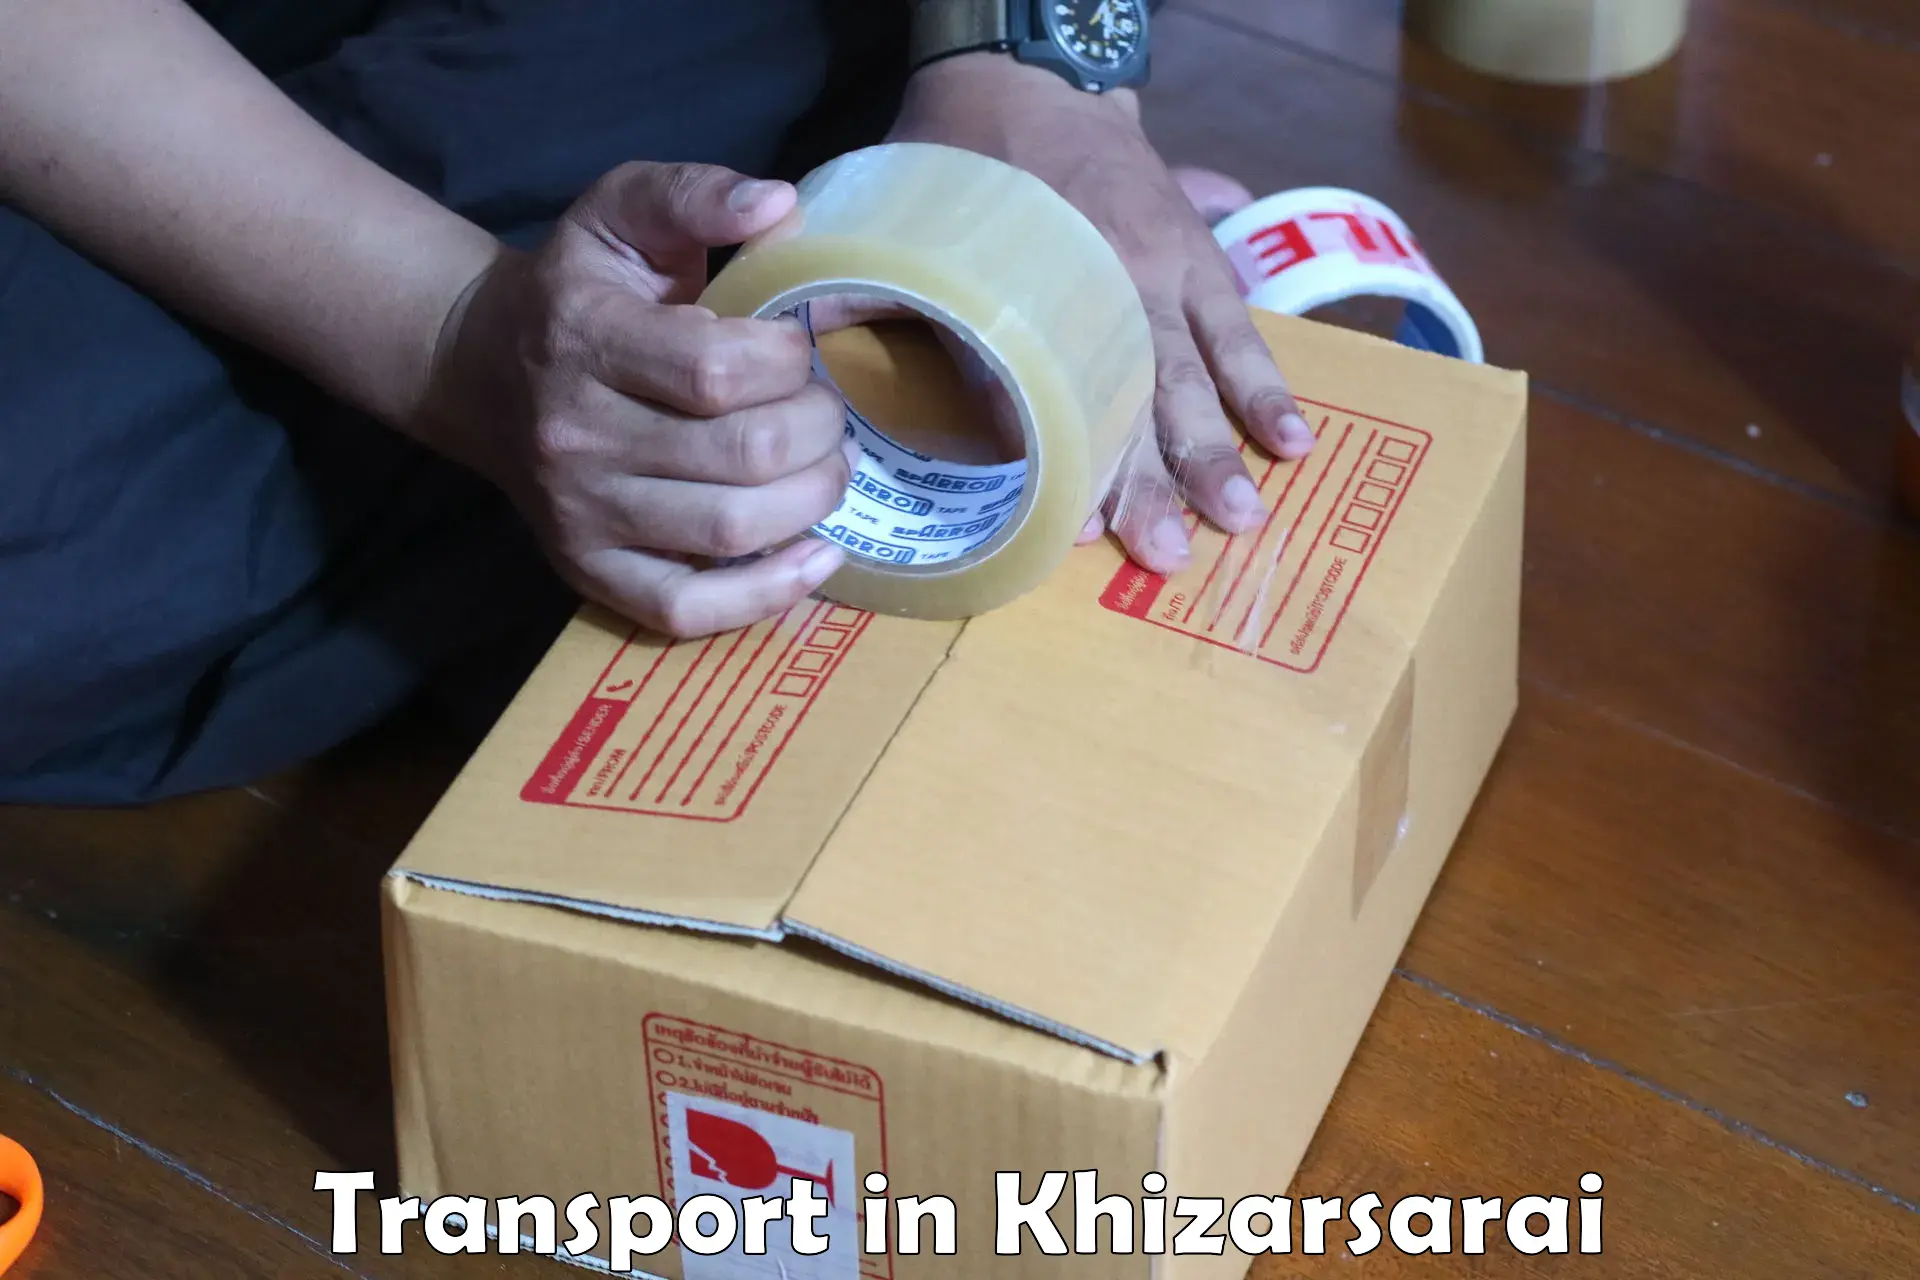 Transport in sharing in Khizarsarai